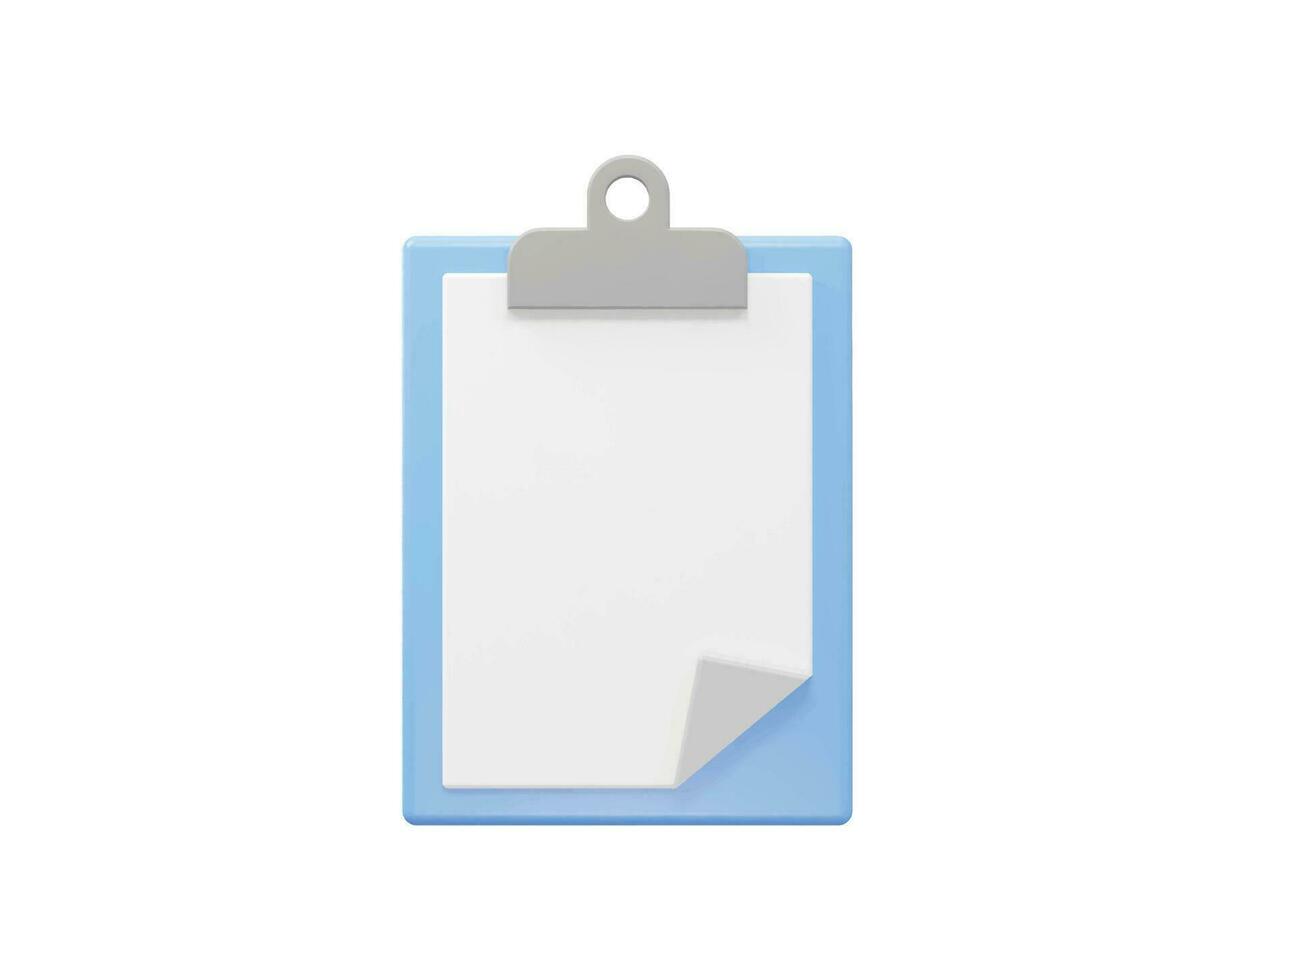 Clipboard icon 3d rendering vector illustration